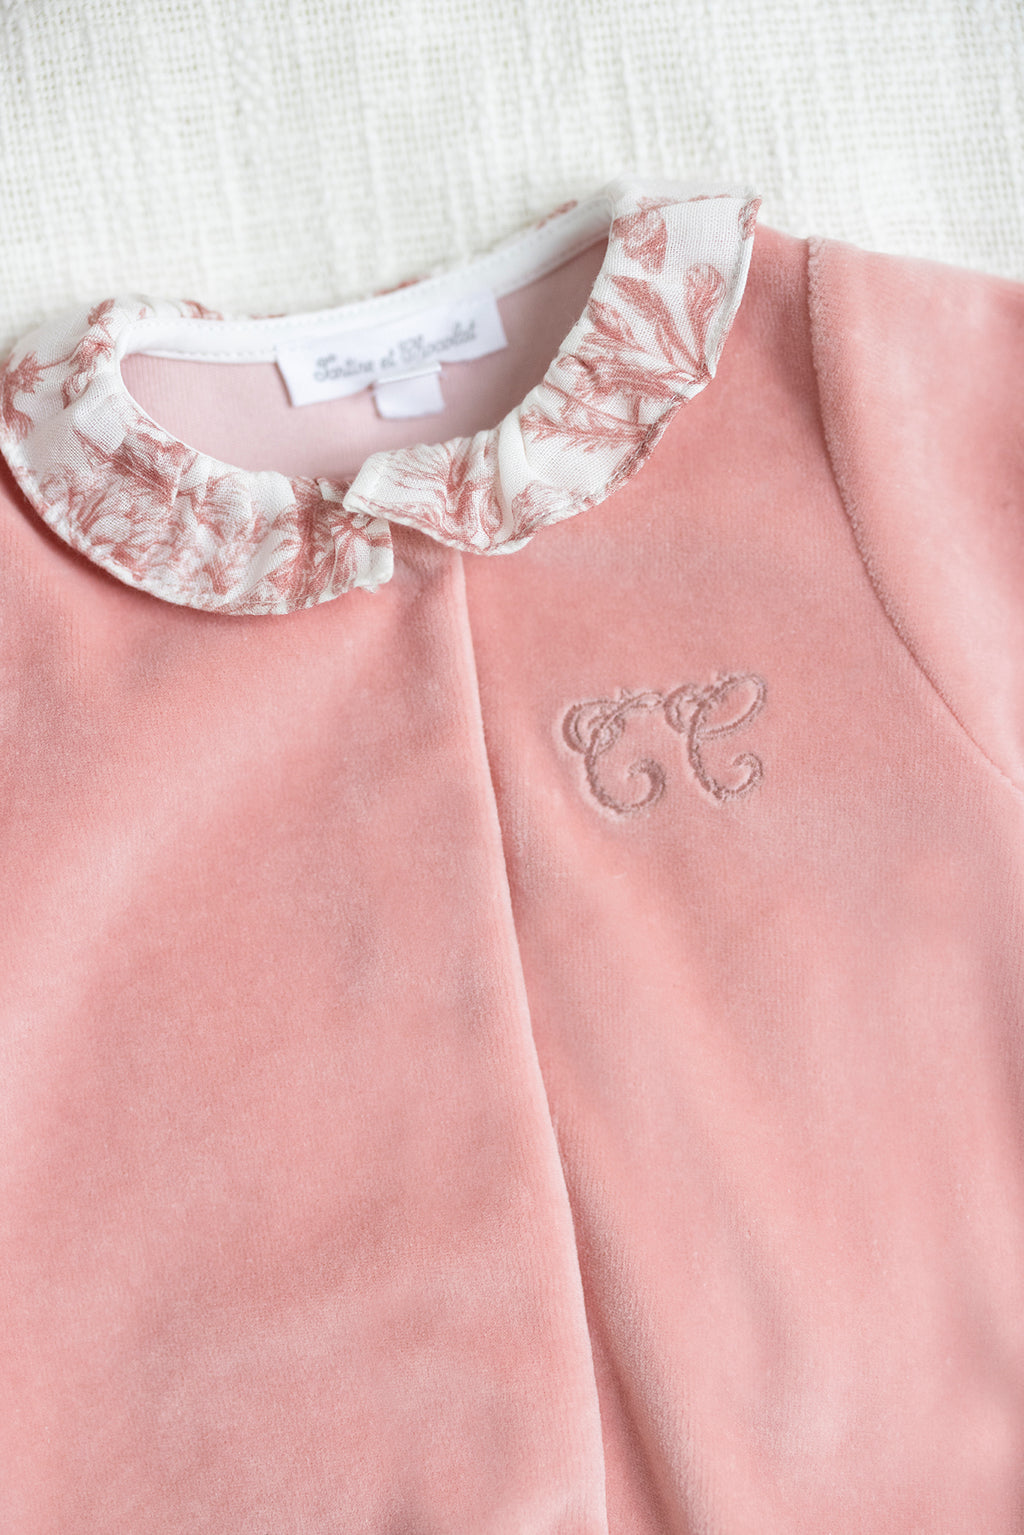 Pyjama - Rose en velours imprimé inspiration Toile de jouy